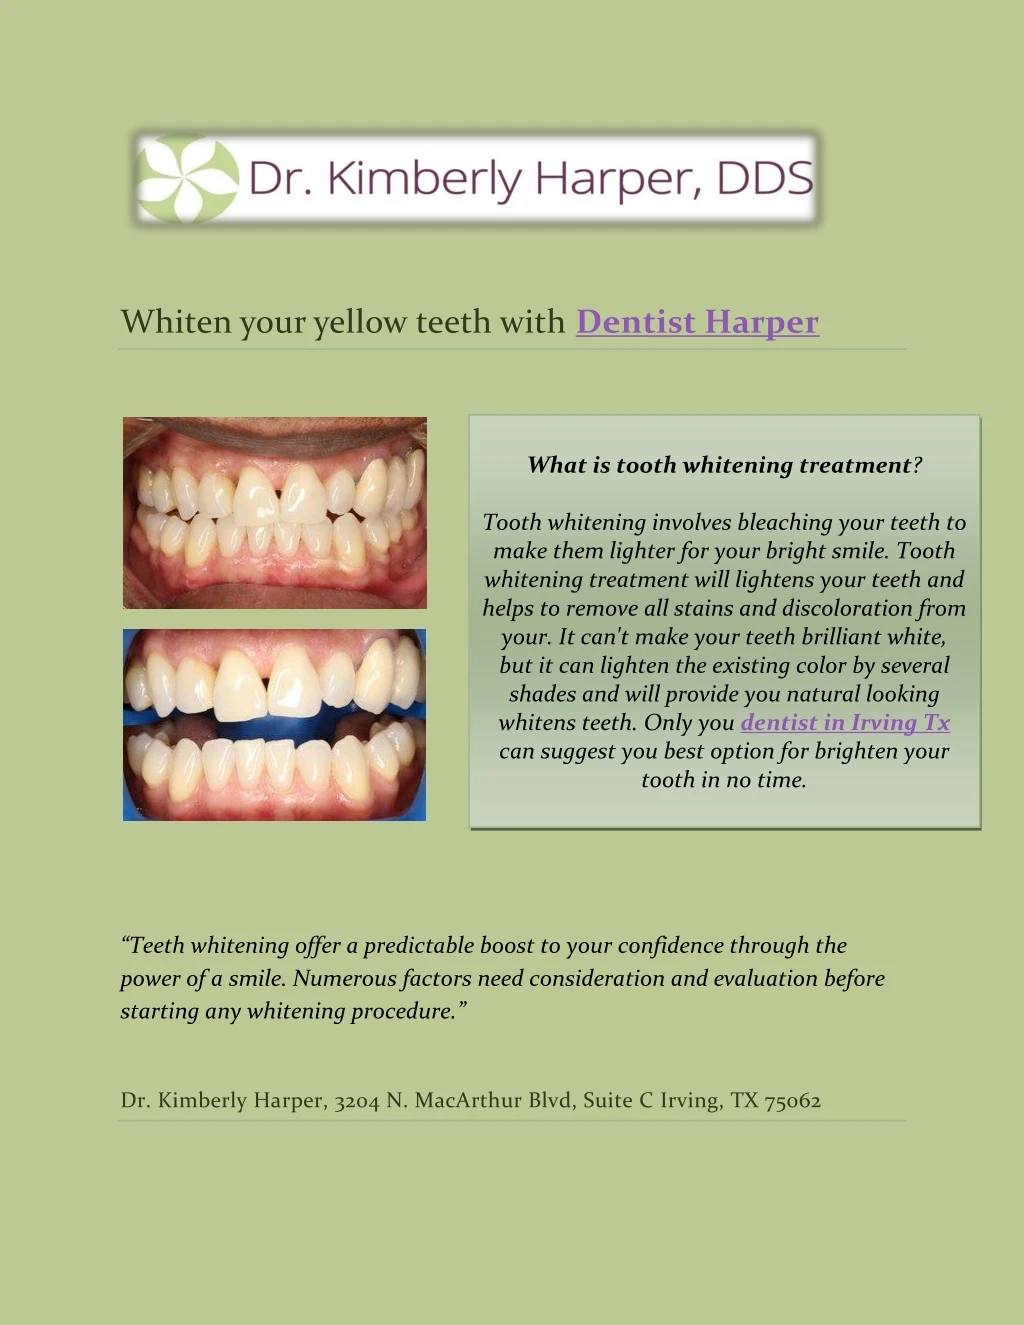 whiten your yellow teeth with dentist harper